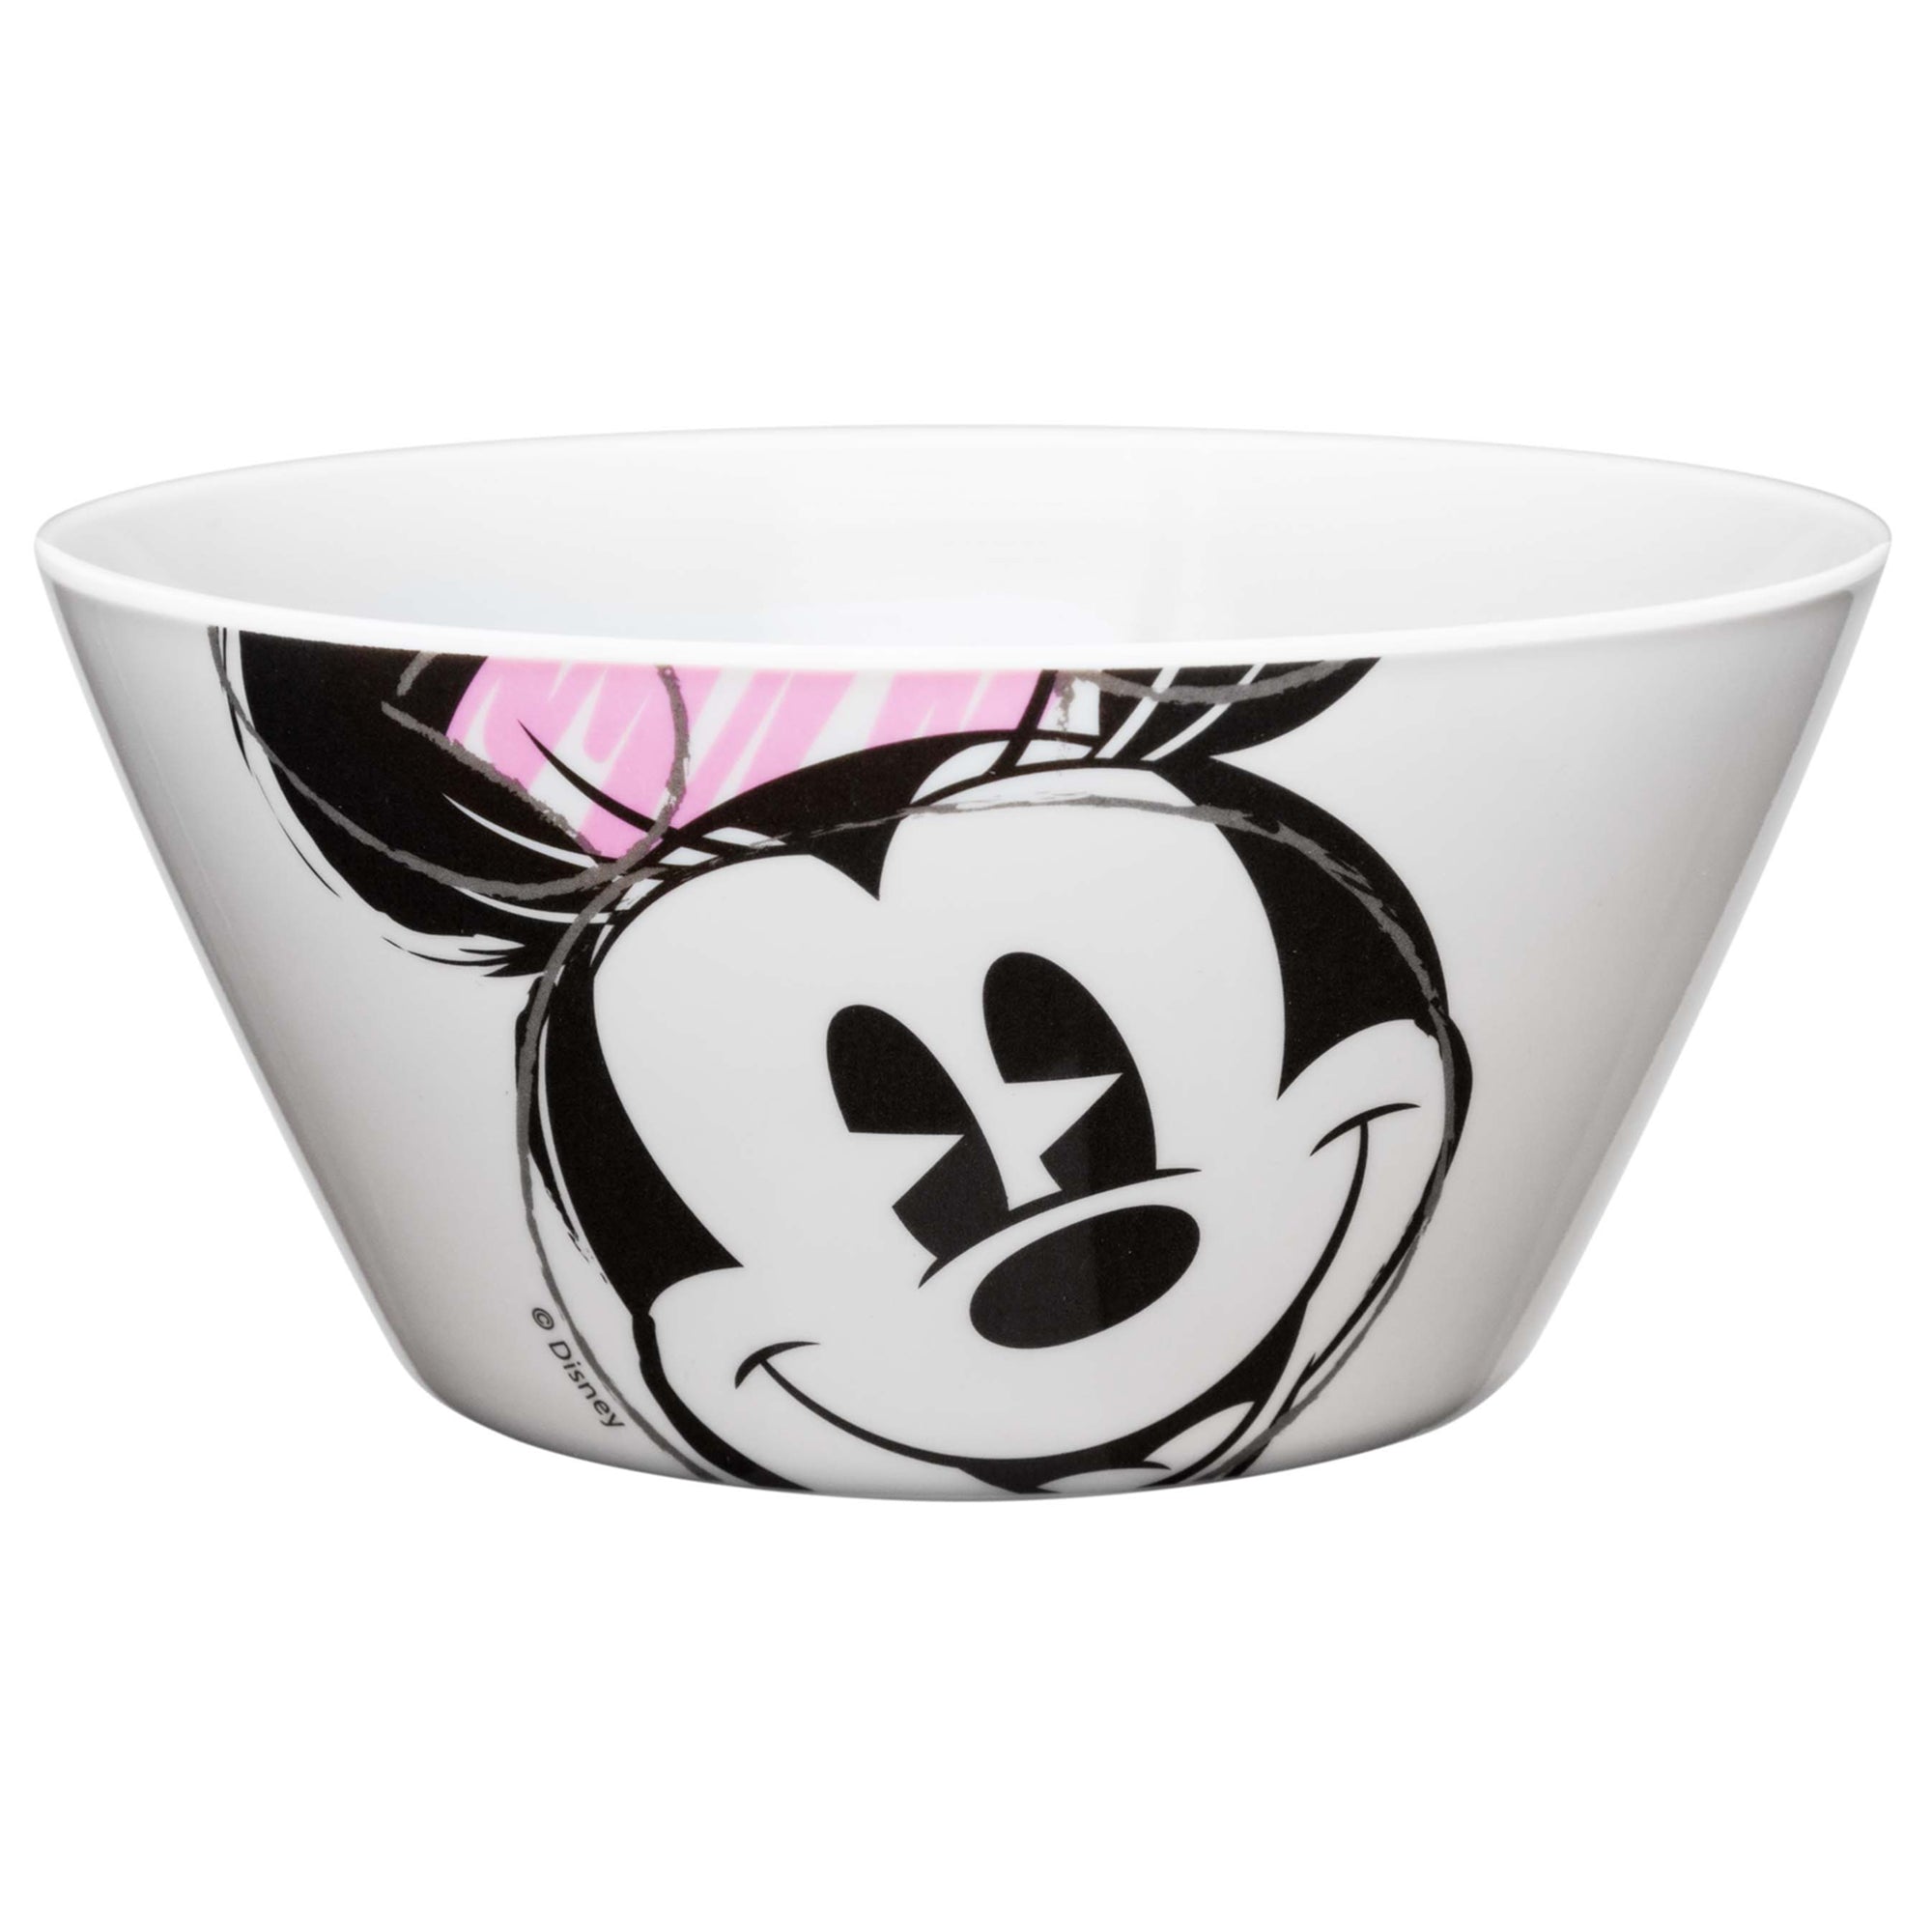 Disney Minnie Mouse Melamine Kids Plate and Bowl Set